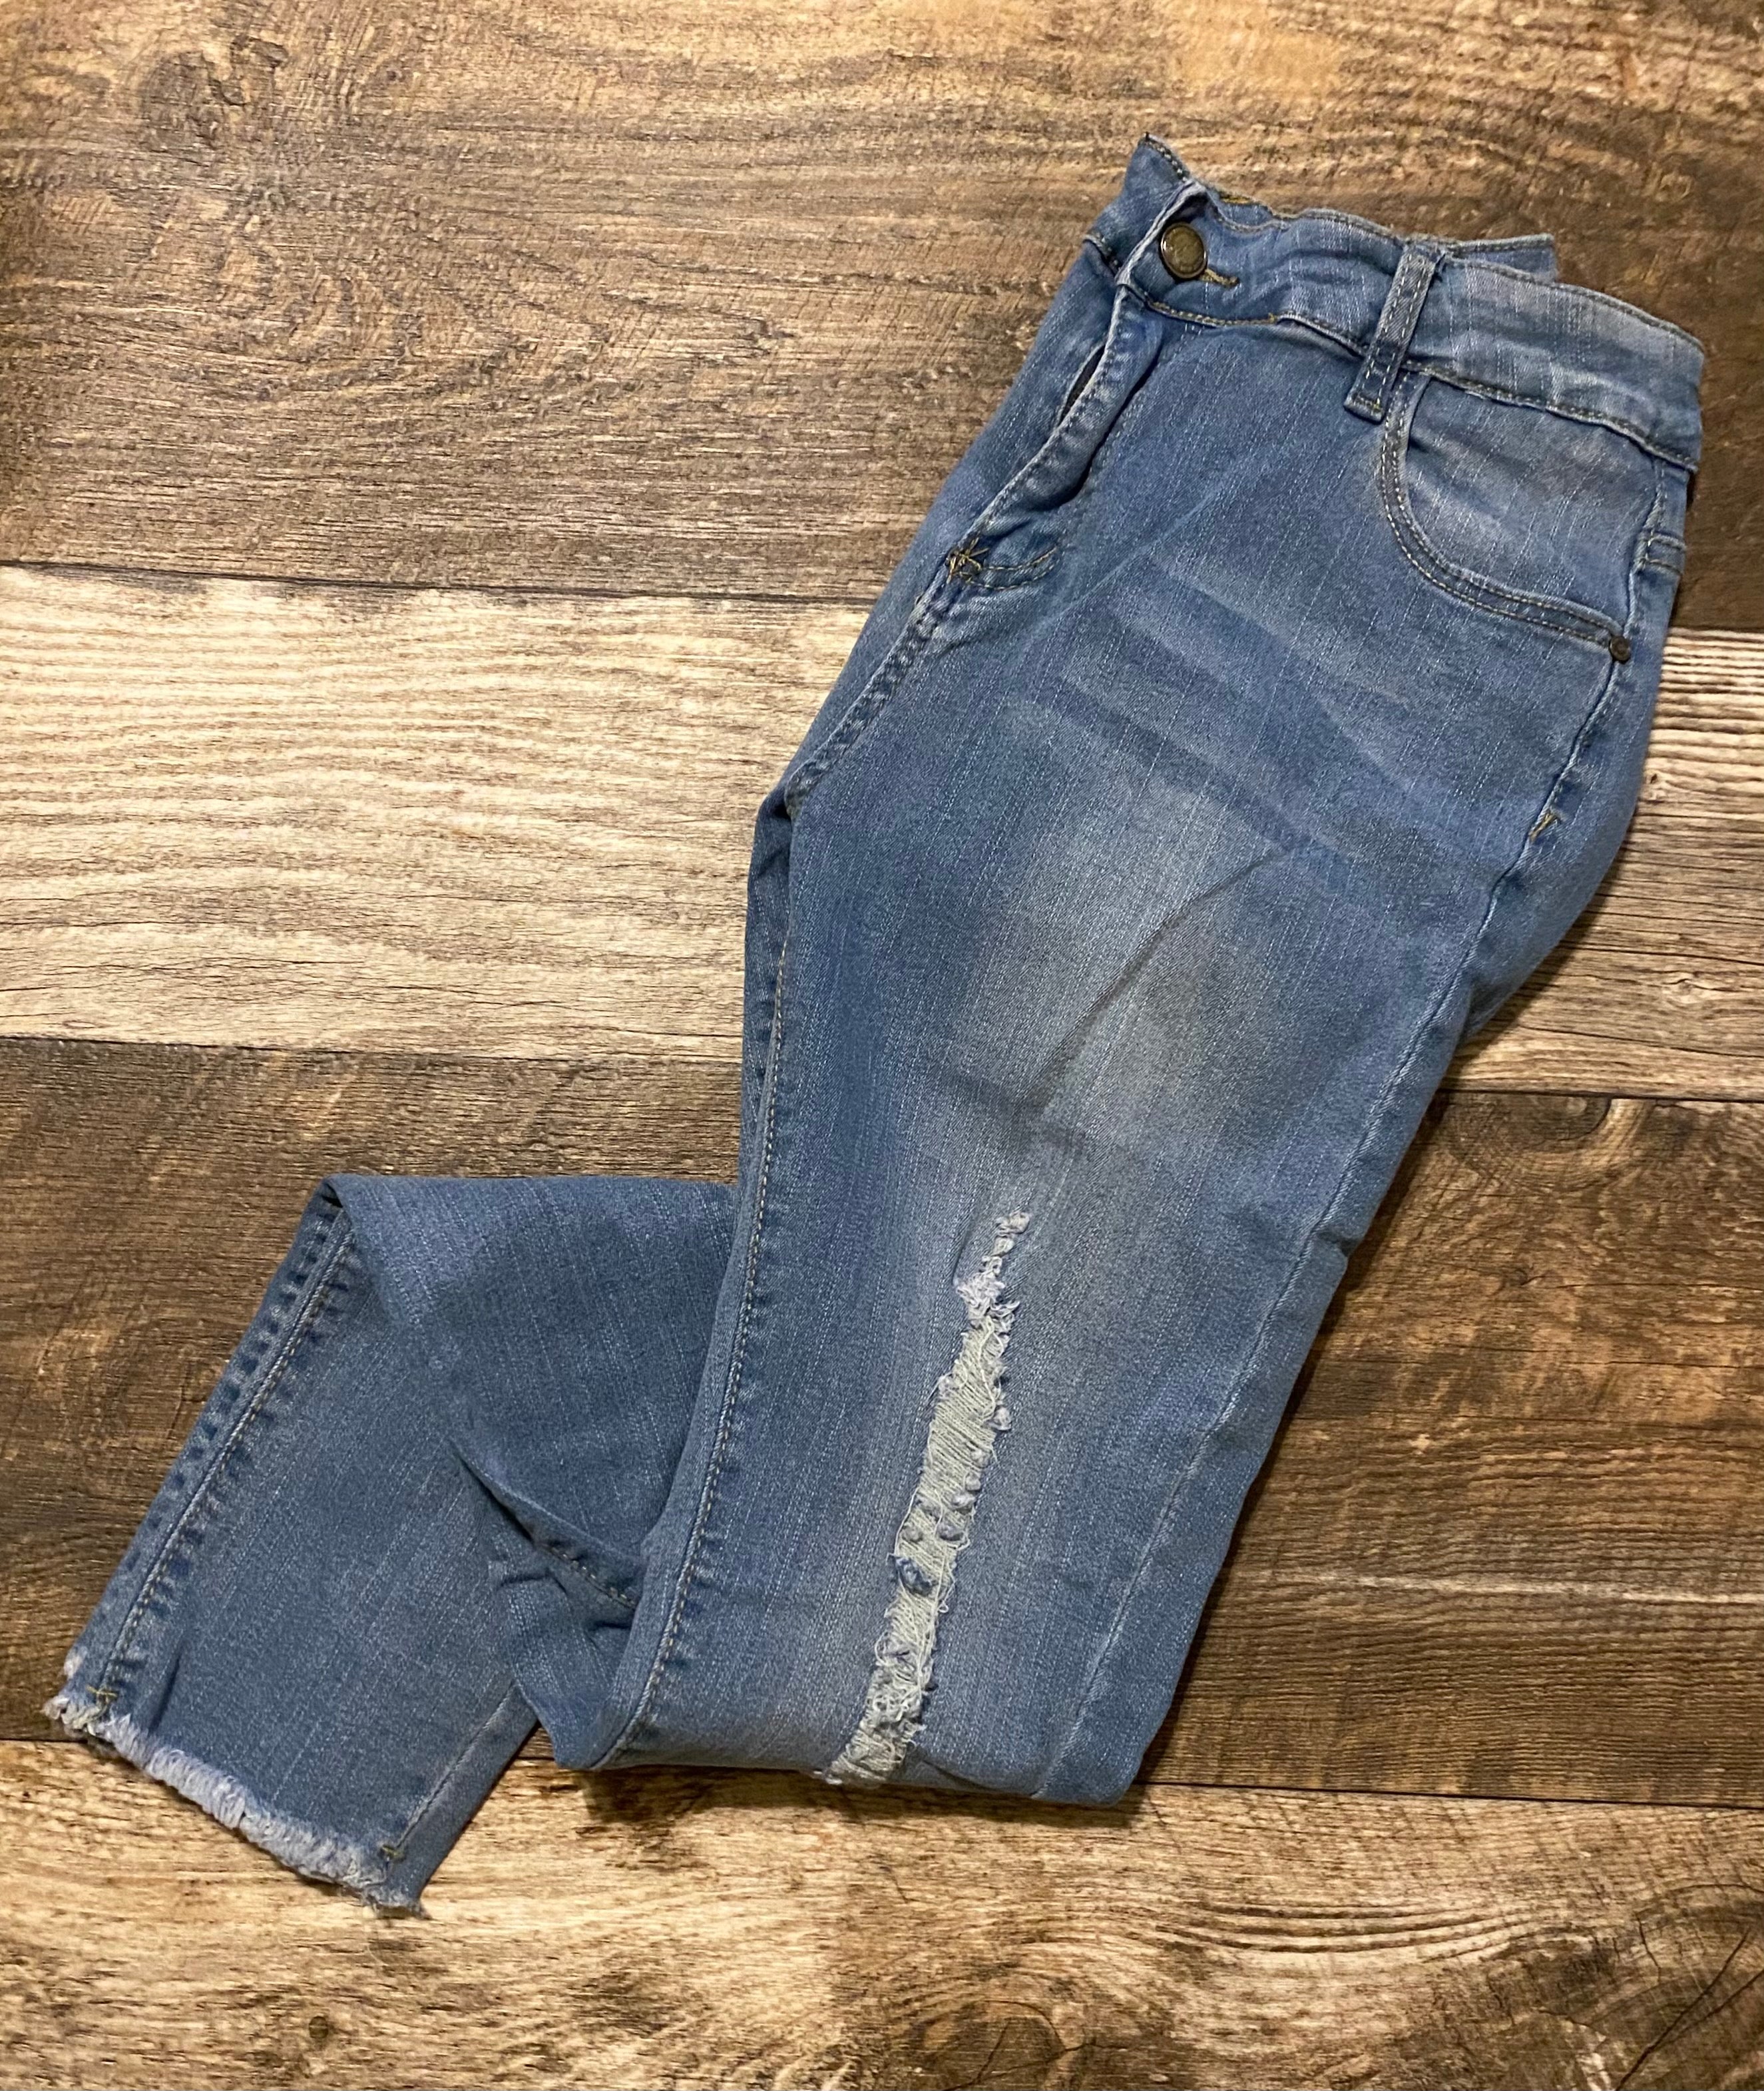 Skinny Jeans - Distressed Bottom Fray - Light